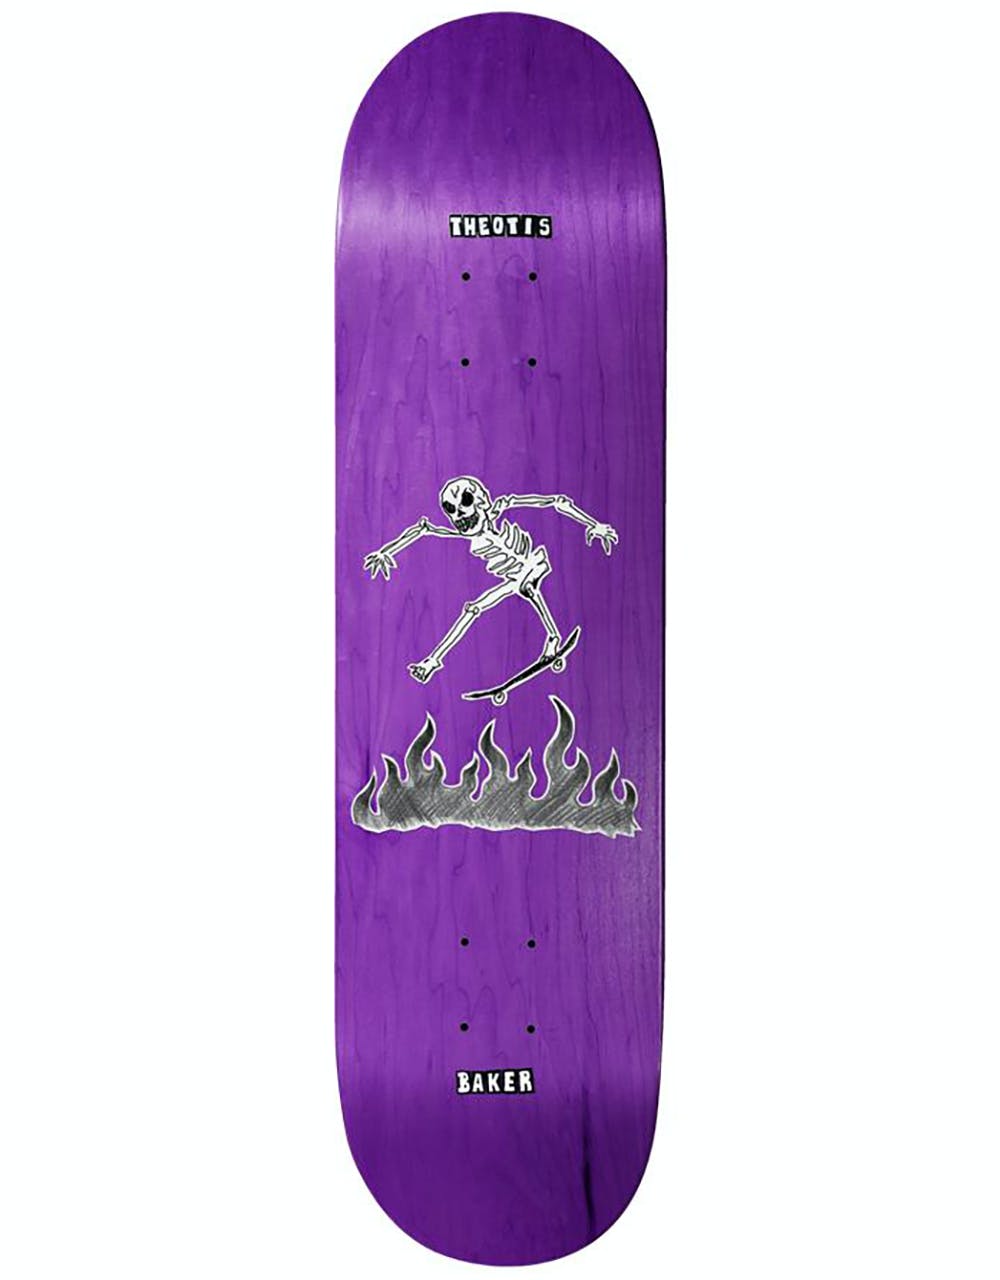 Baker Theotis Cremation Mayhem Skateboard Deck - 8.125"